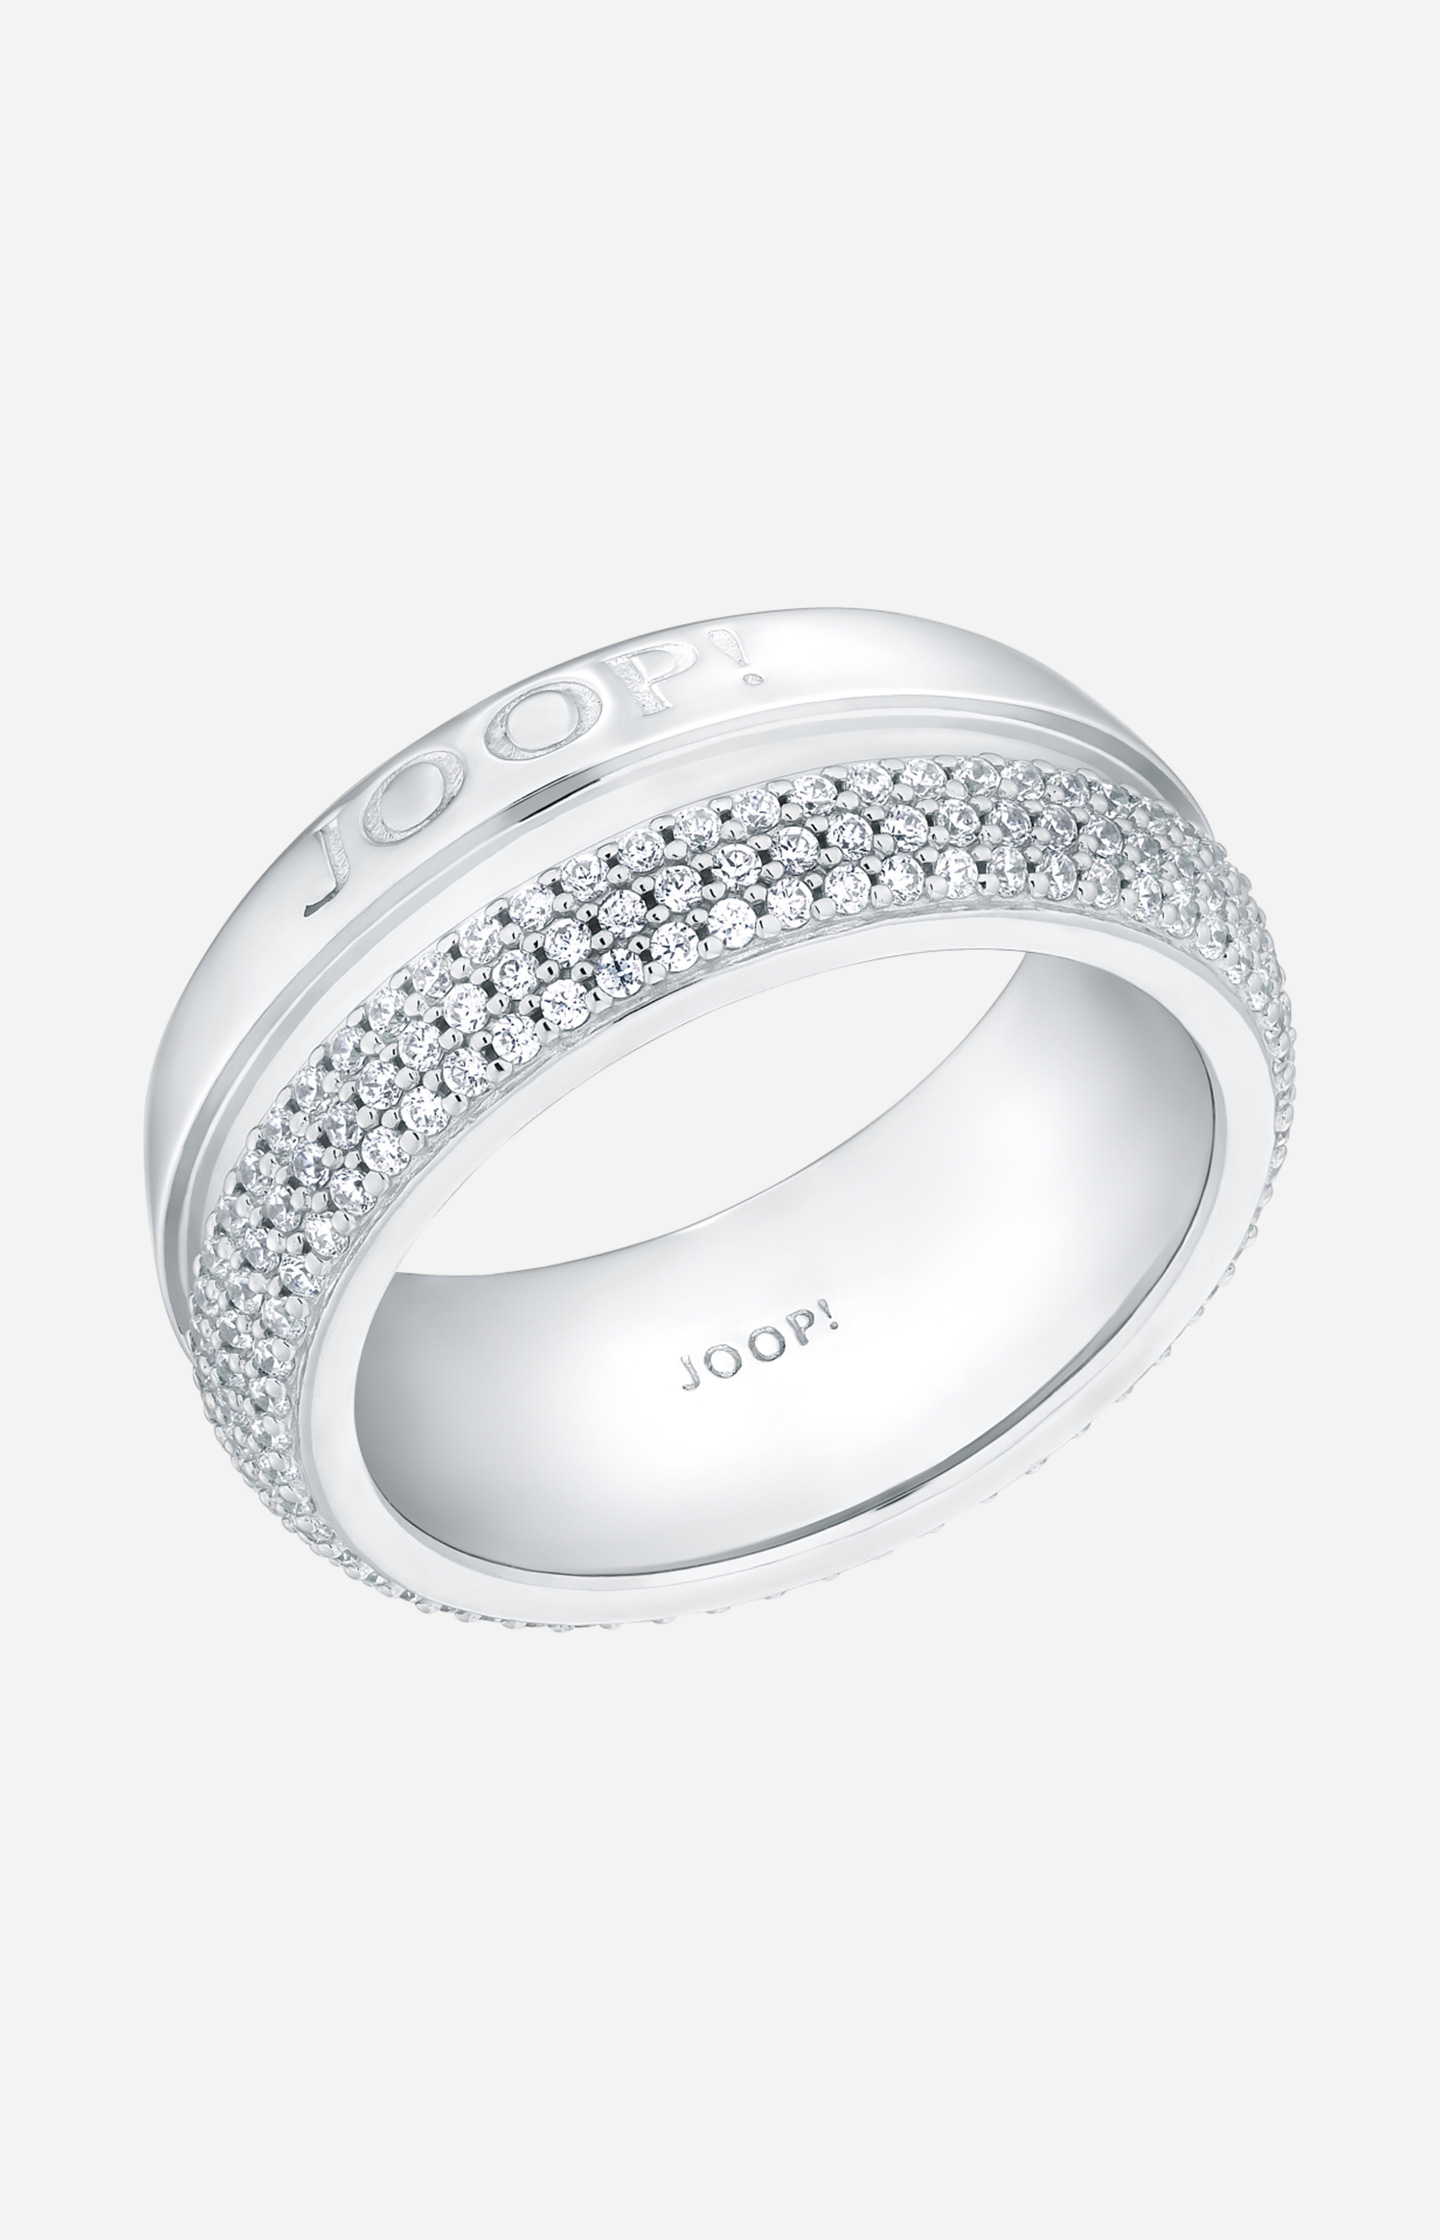 Ring in Silver - in the JOOP! Online Shop